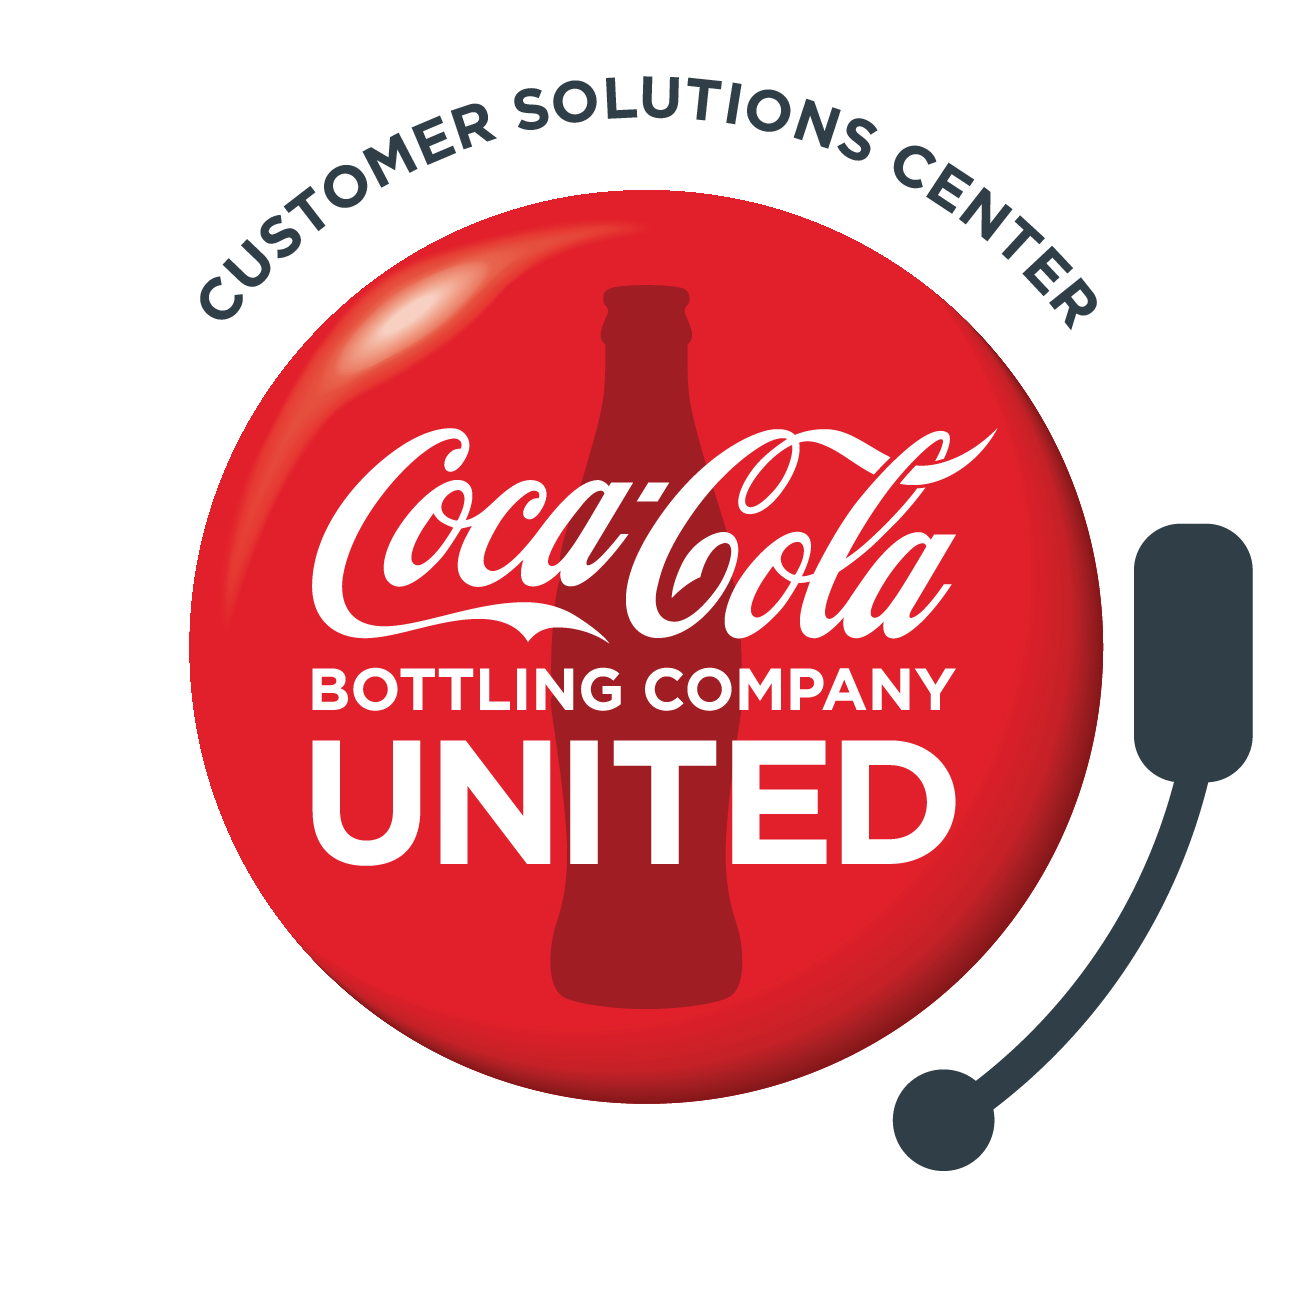 Customer Solutions Coca-cola United - Call Center Coca Cola Clipart (1291x1428), Png Download